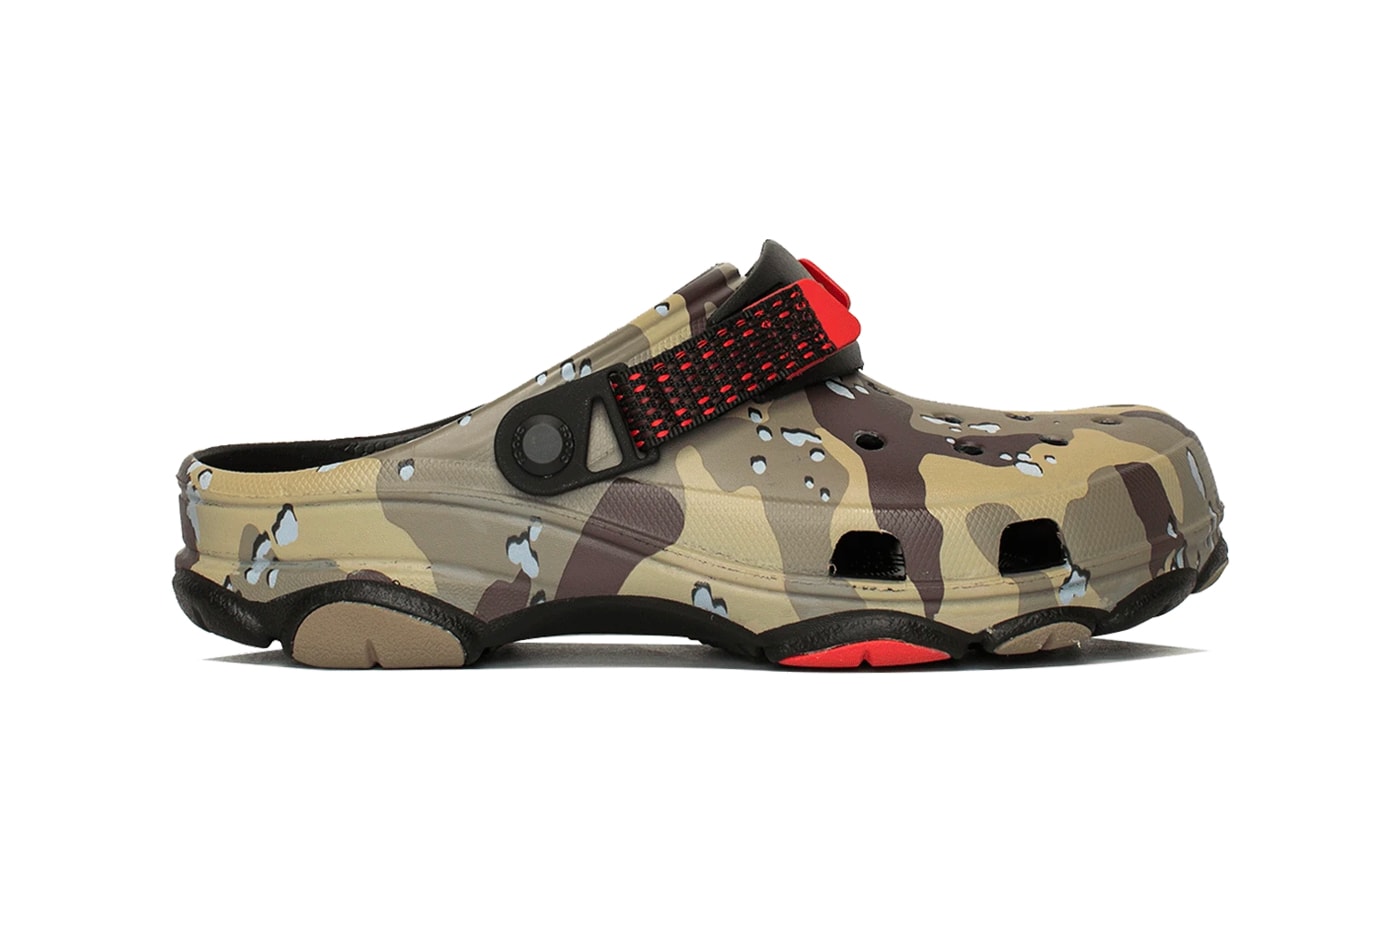 Crocs Classic All Terrain Clog in "Desert Camo M" Release footwear sandals beige khaki brown red